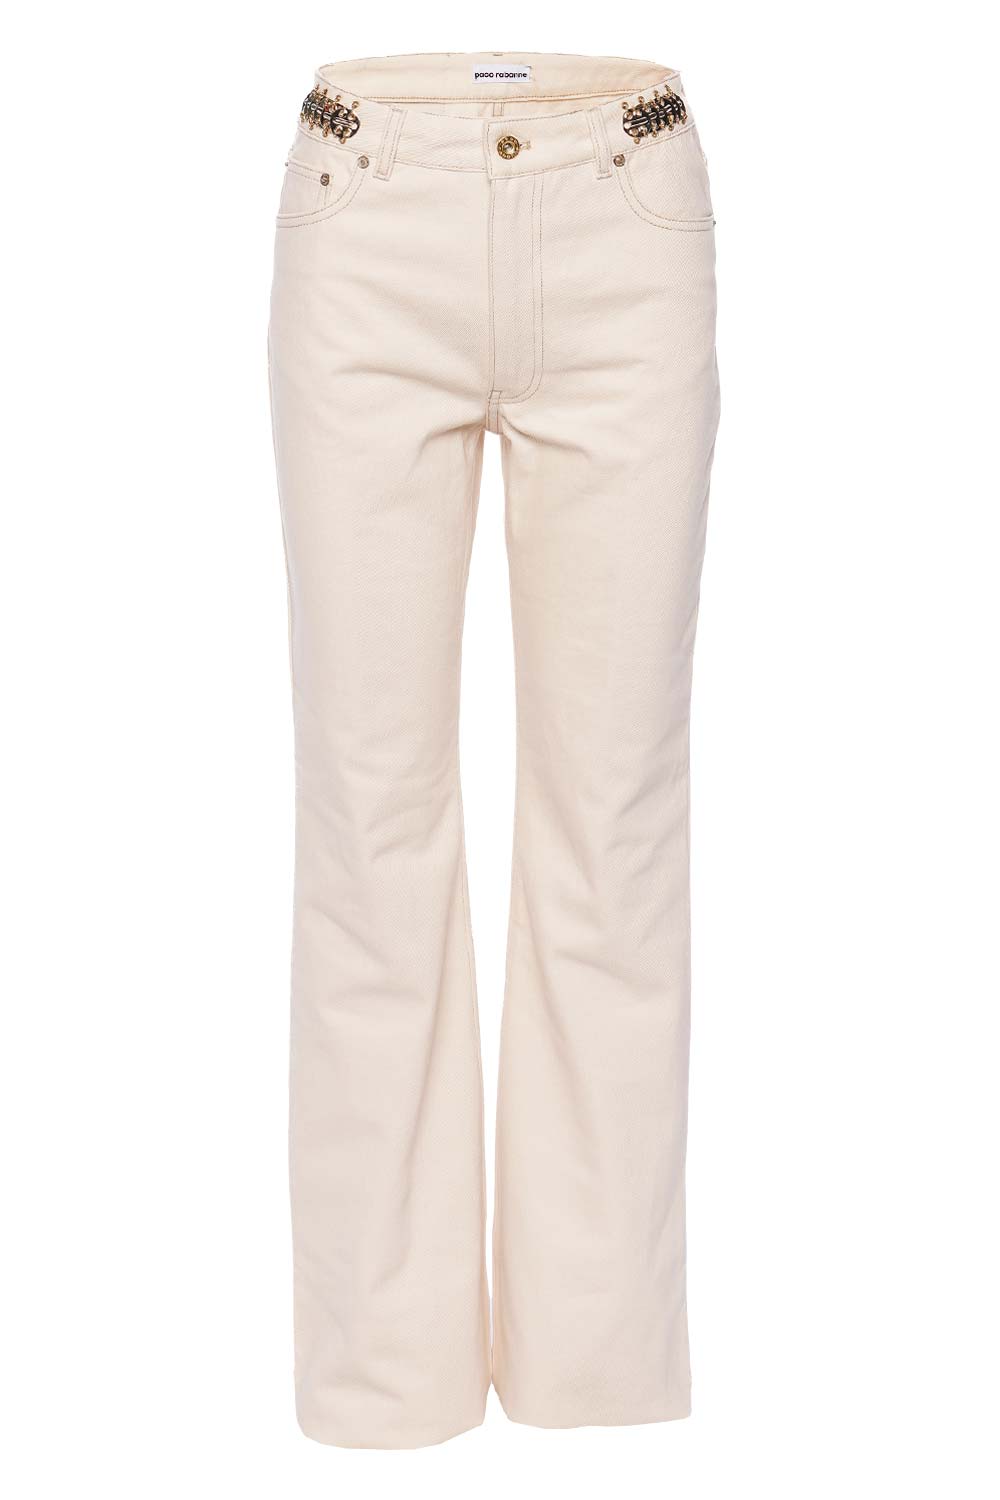 Paco Rabanne Off White Flare Embellished Denim Jeans